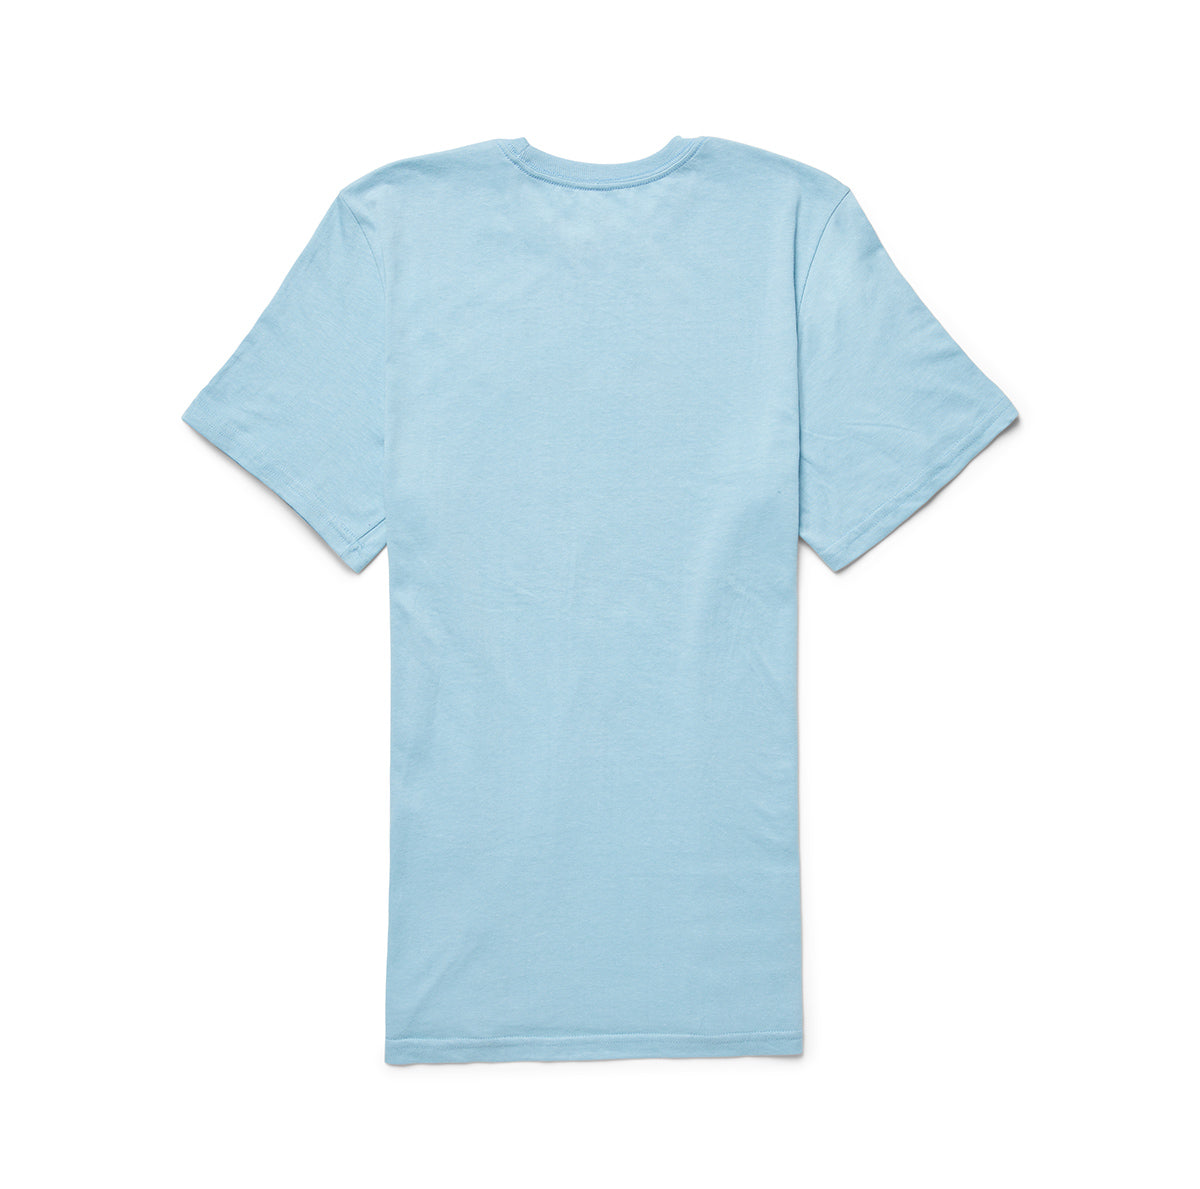 Cotopaxi Utopia T-Shirt - MENS ユートピア ティーシャツ メンズ